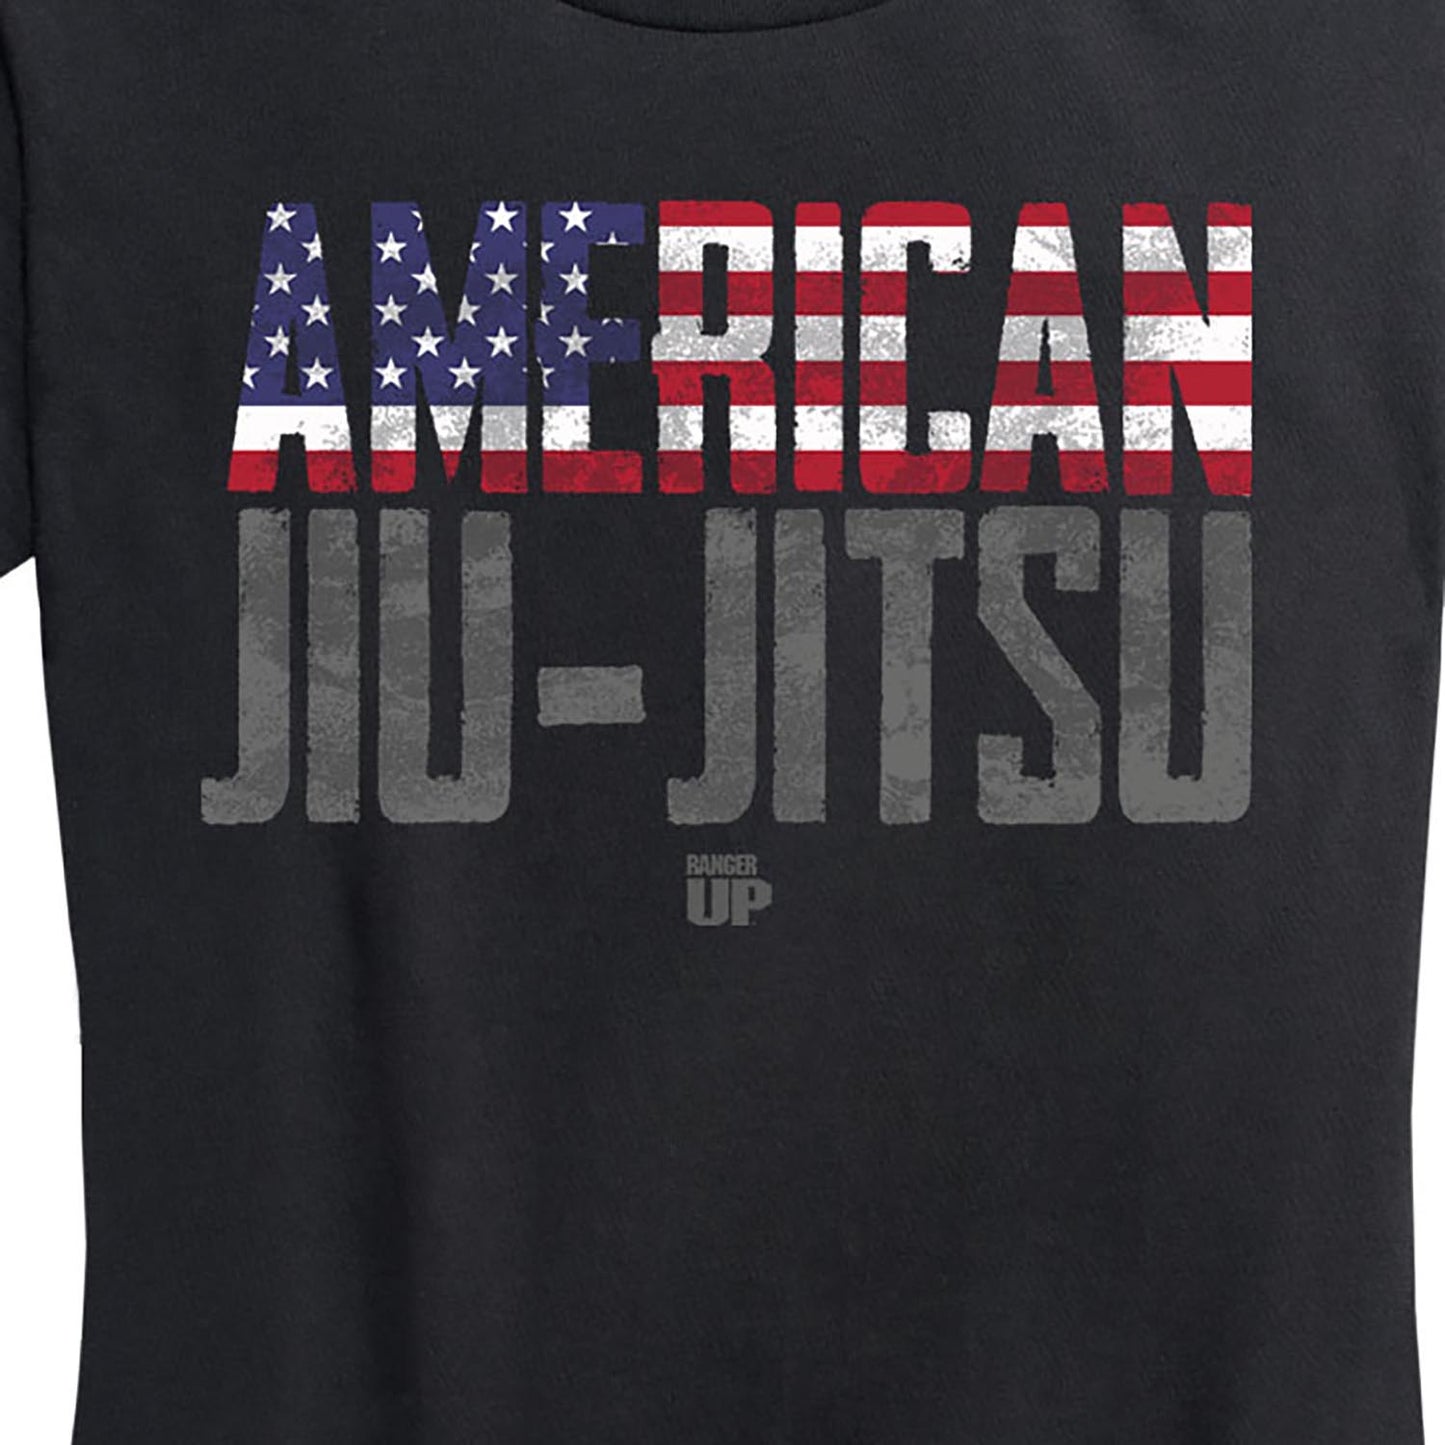 Women's American Jiu Jitsu Flag Tee